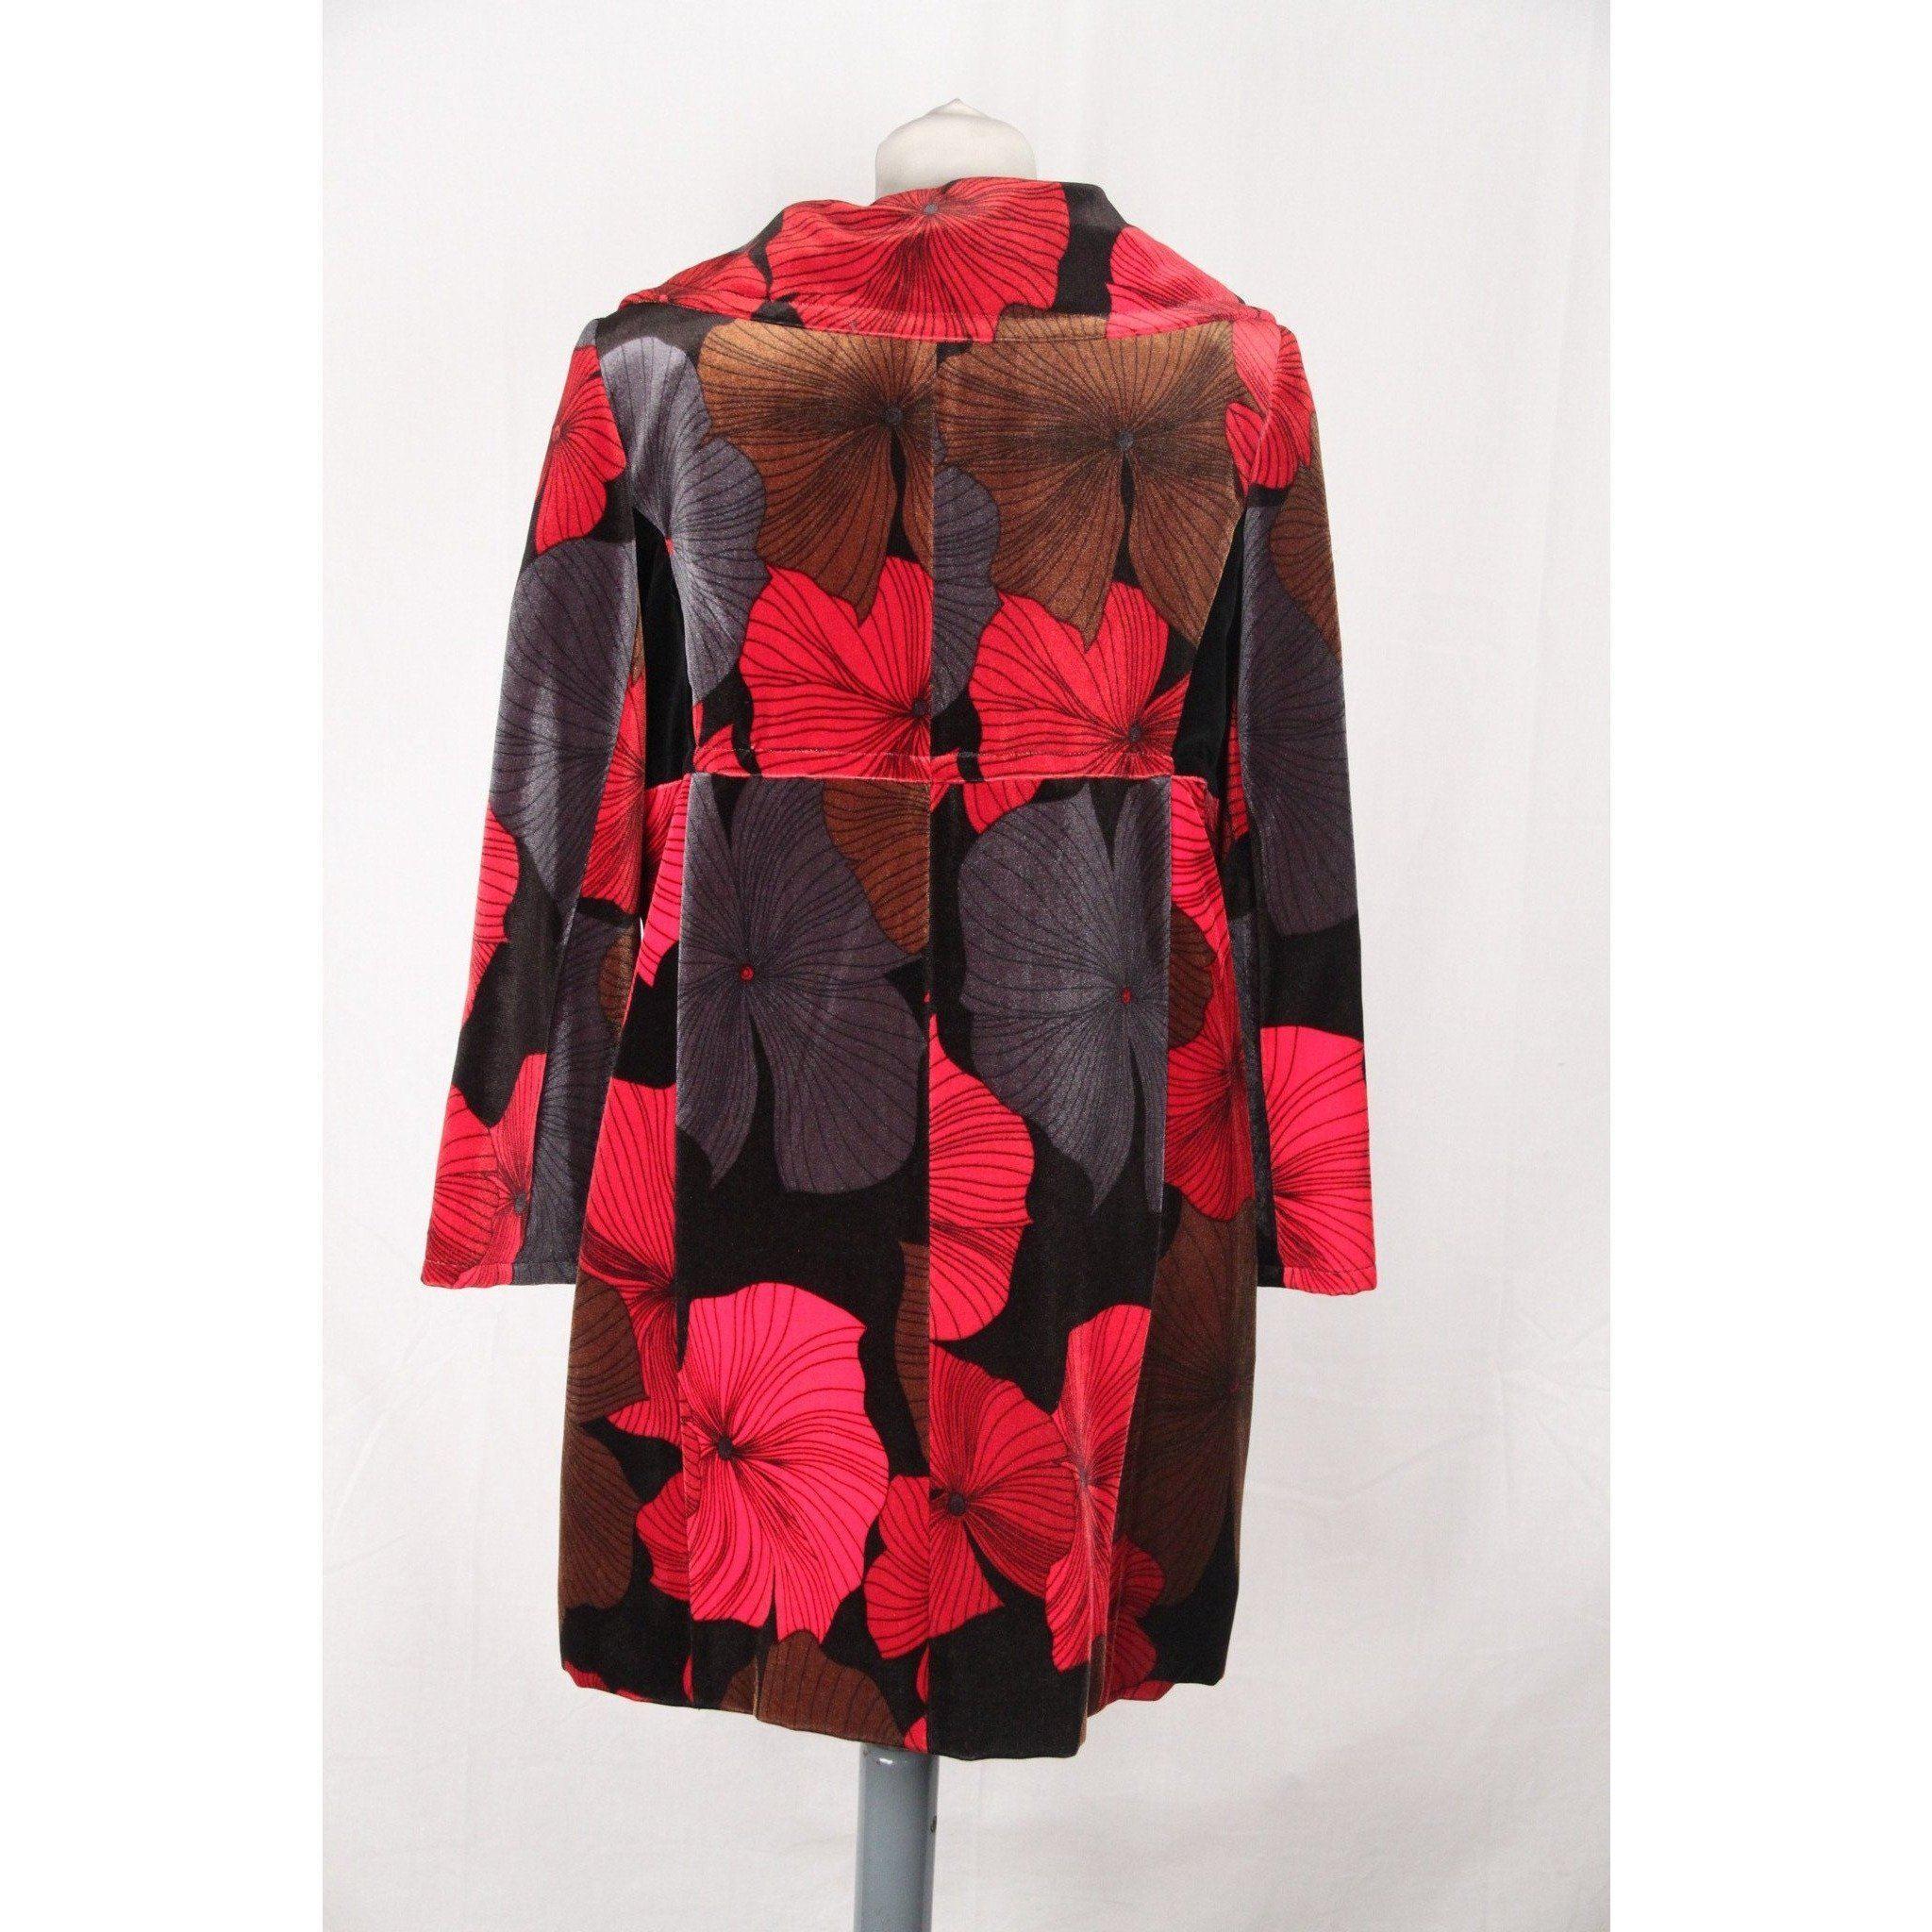 PER NON DORMIRE Red & Black Floral Pattern VELVET COAT Size 40 1